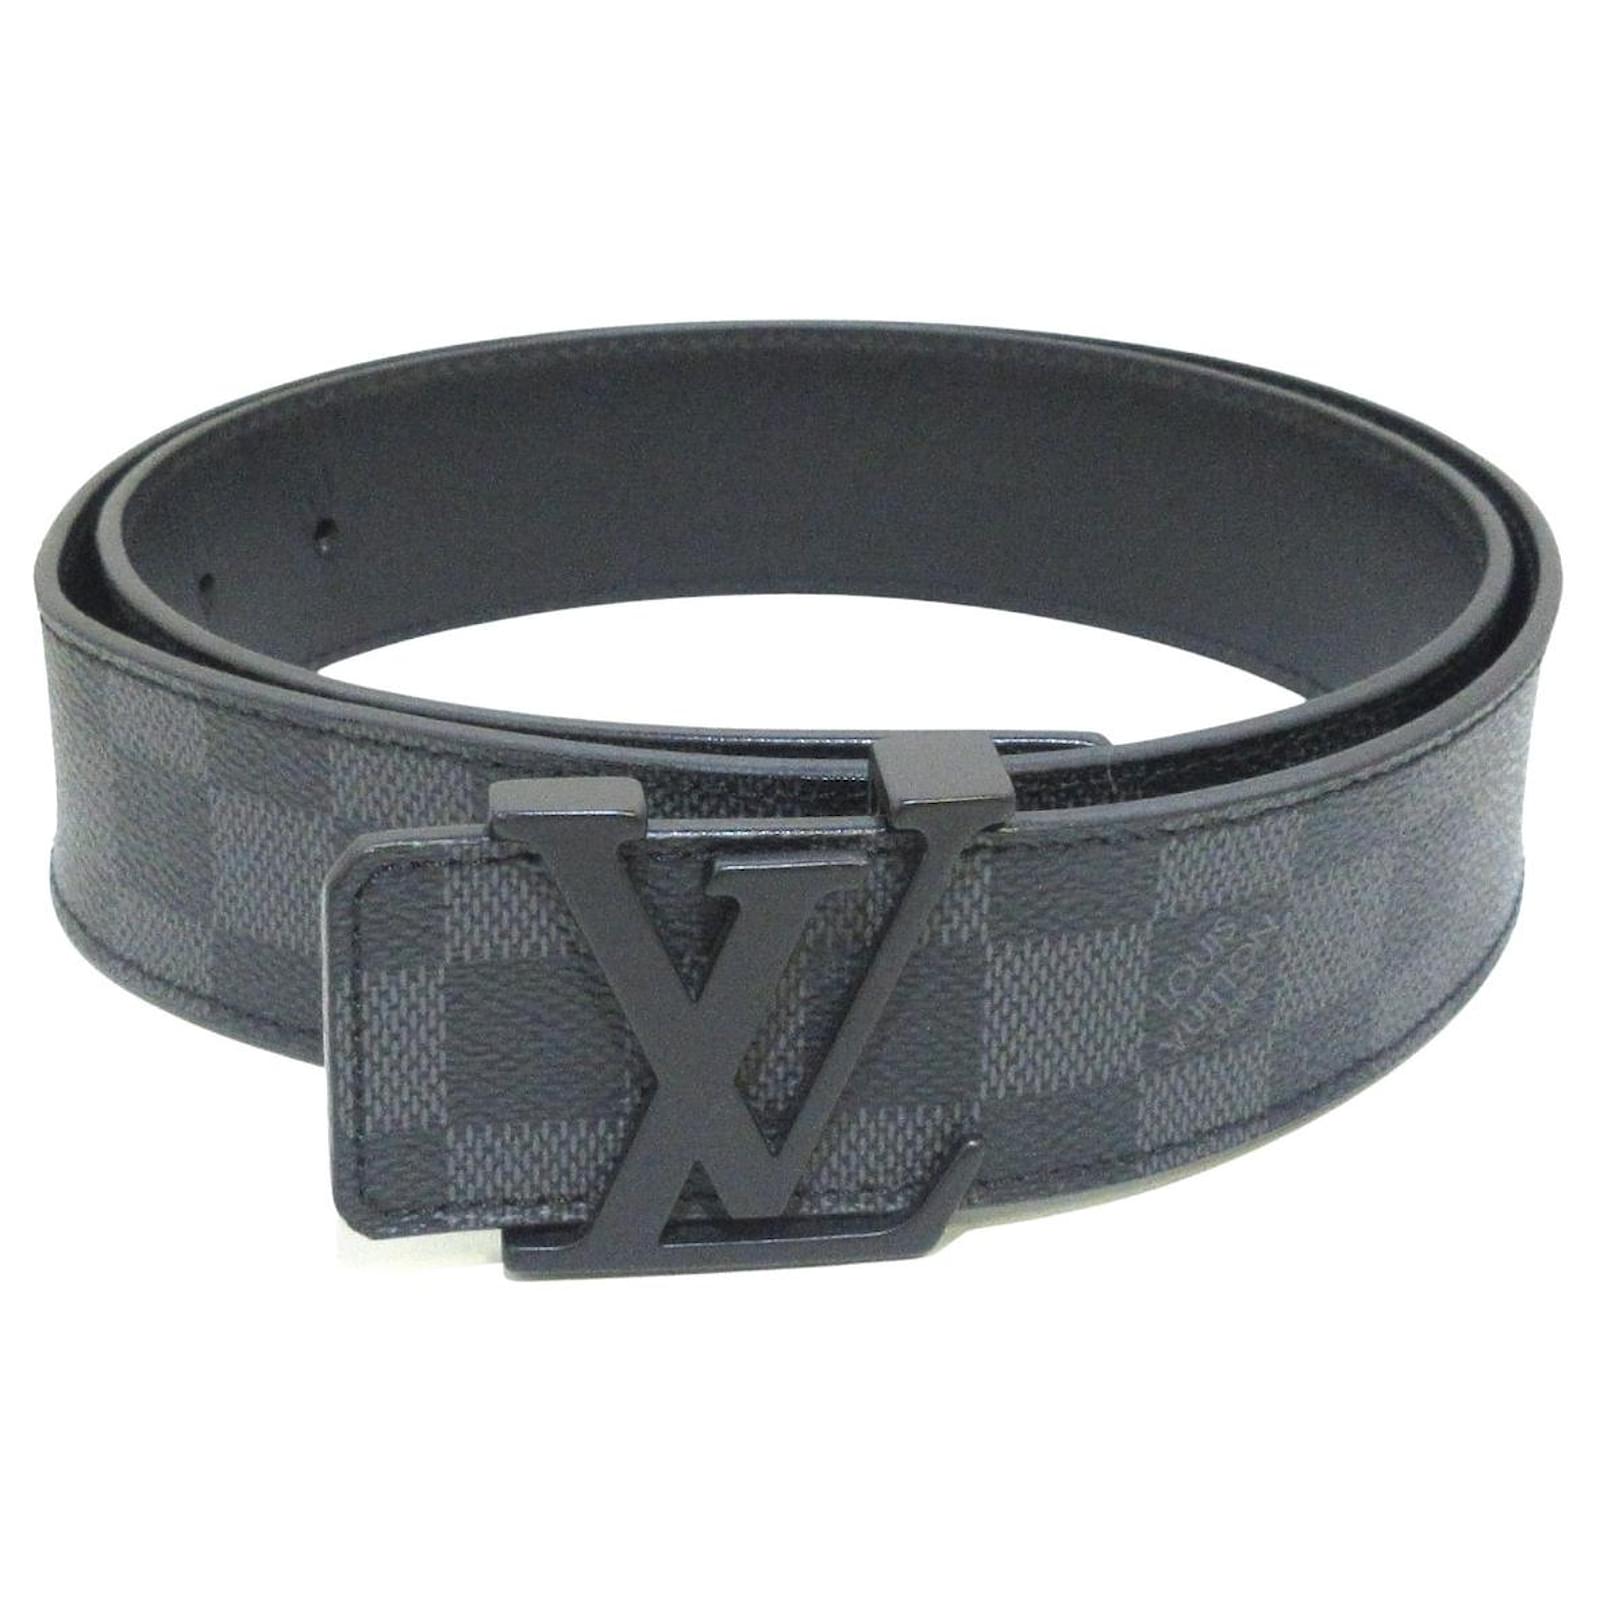 lv initial belt